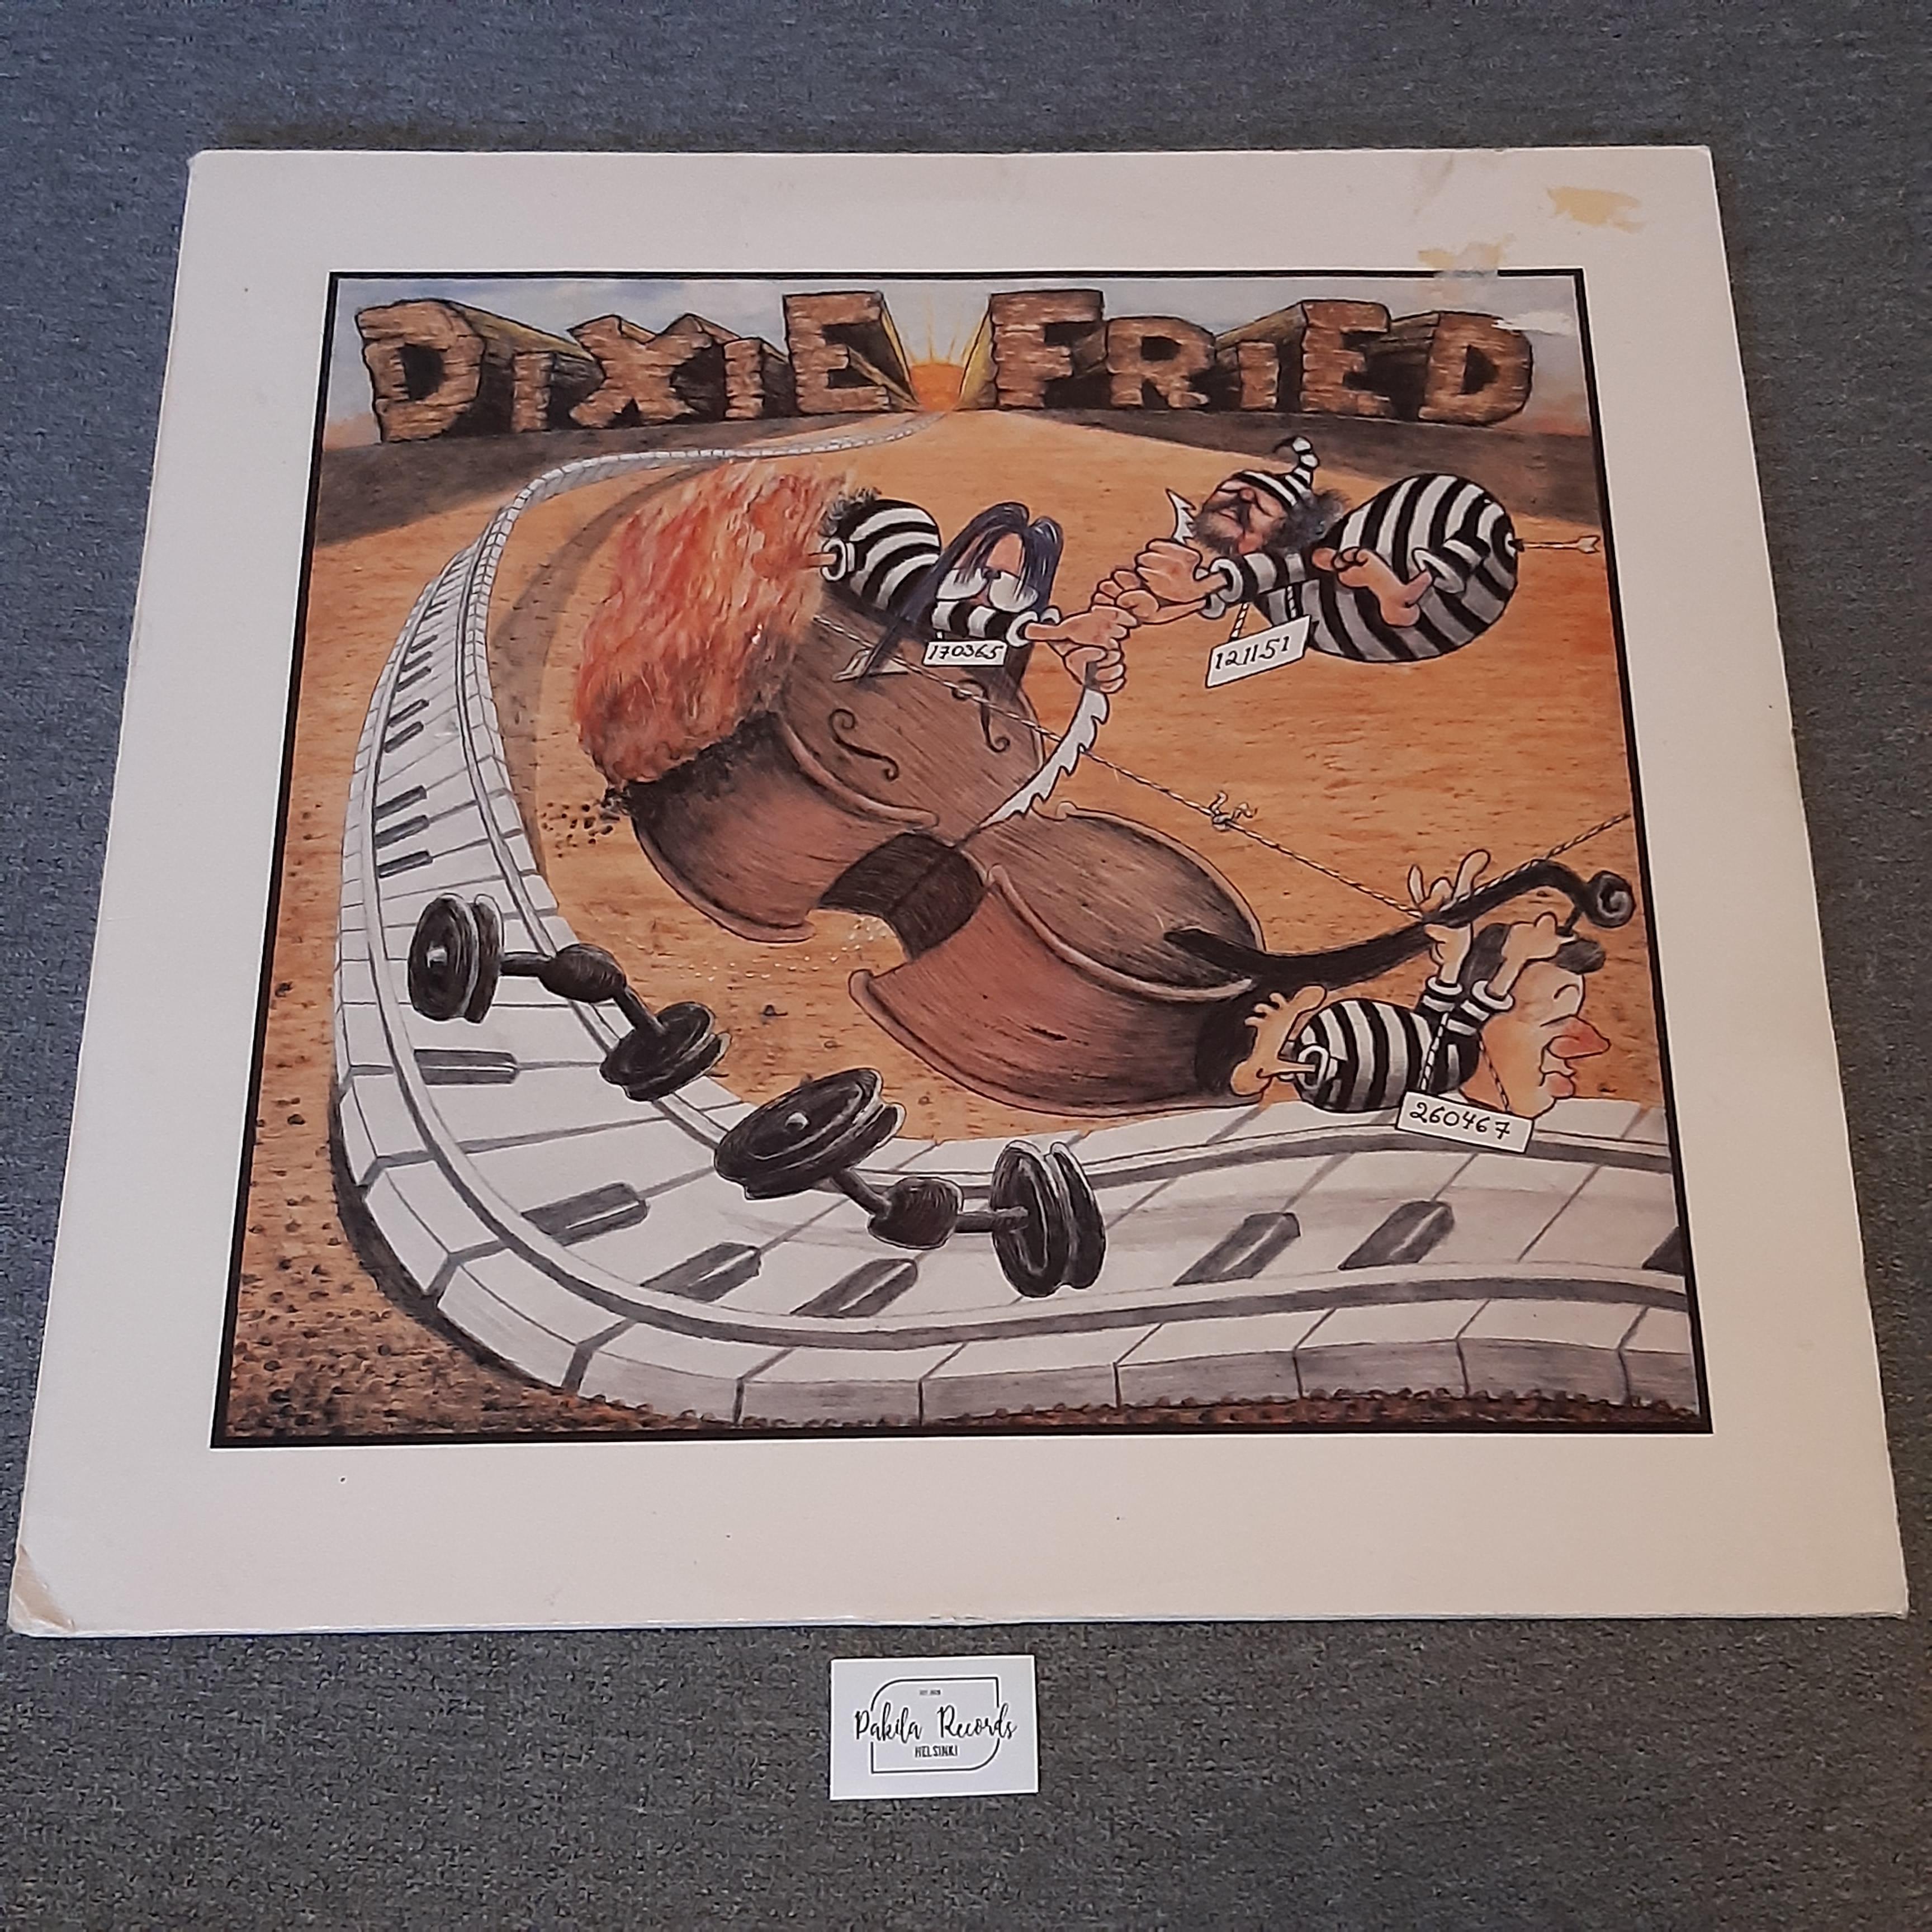 Dixie Fried - Dixie Fried - LP (käytetty)